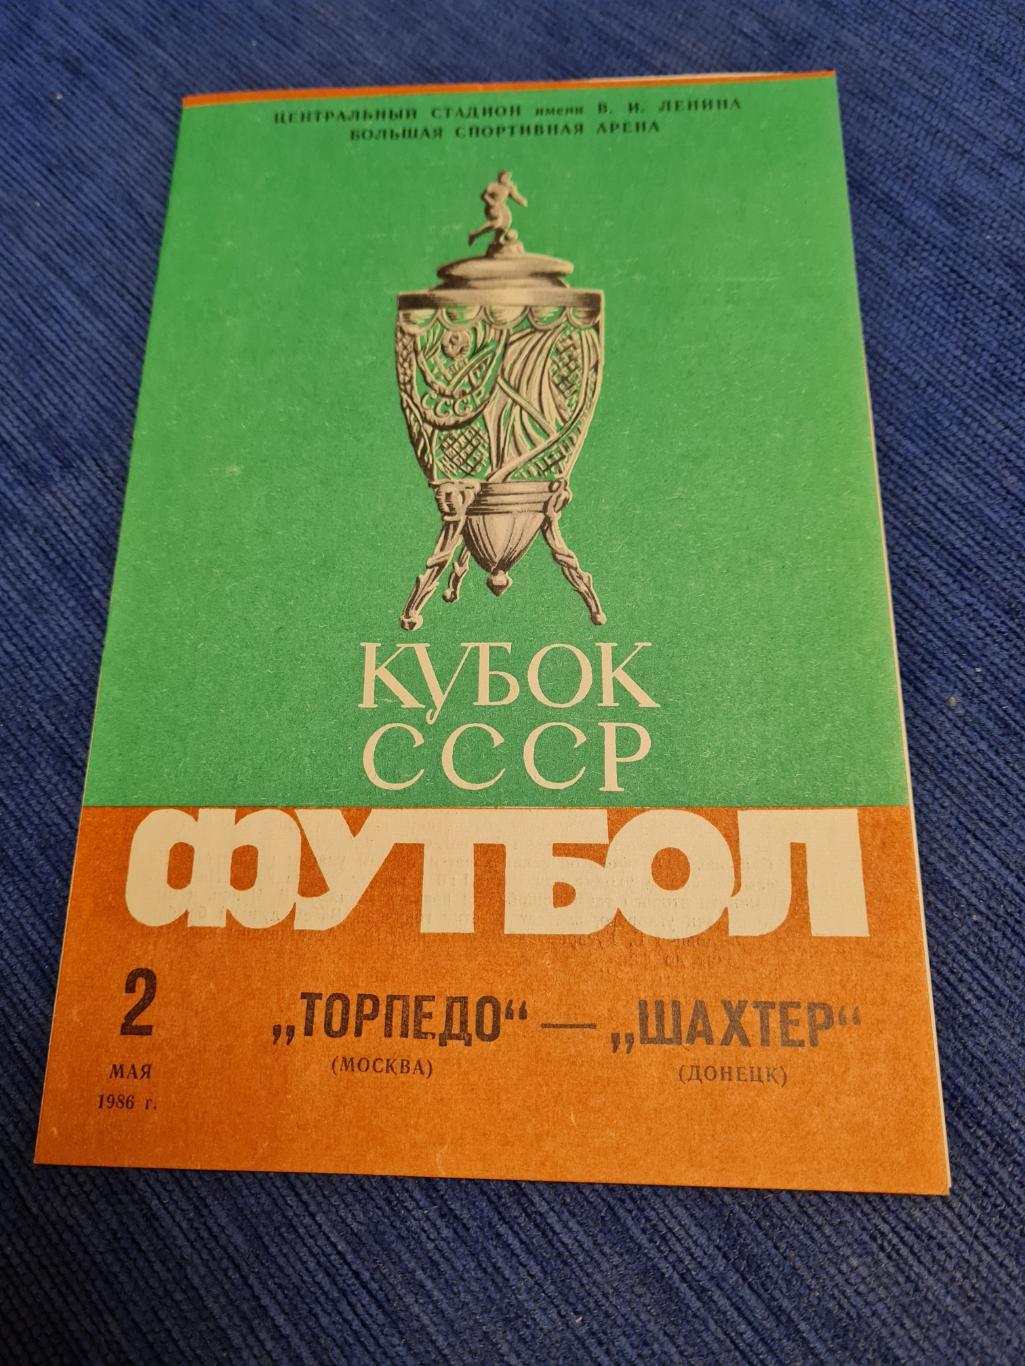 02.05.1986 Торпедо Москва- Шахтёр Донецк.Программа + билет.